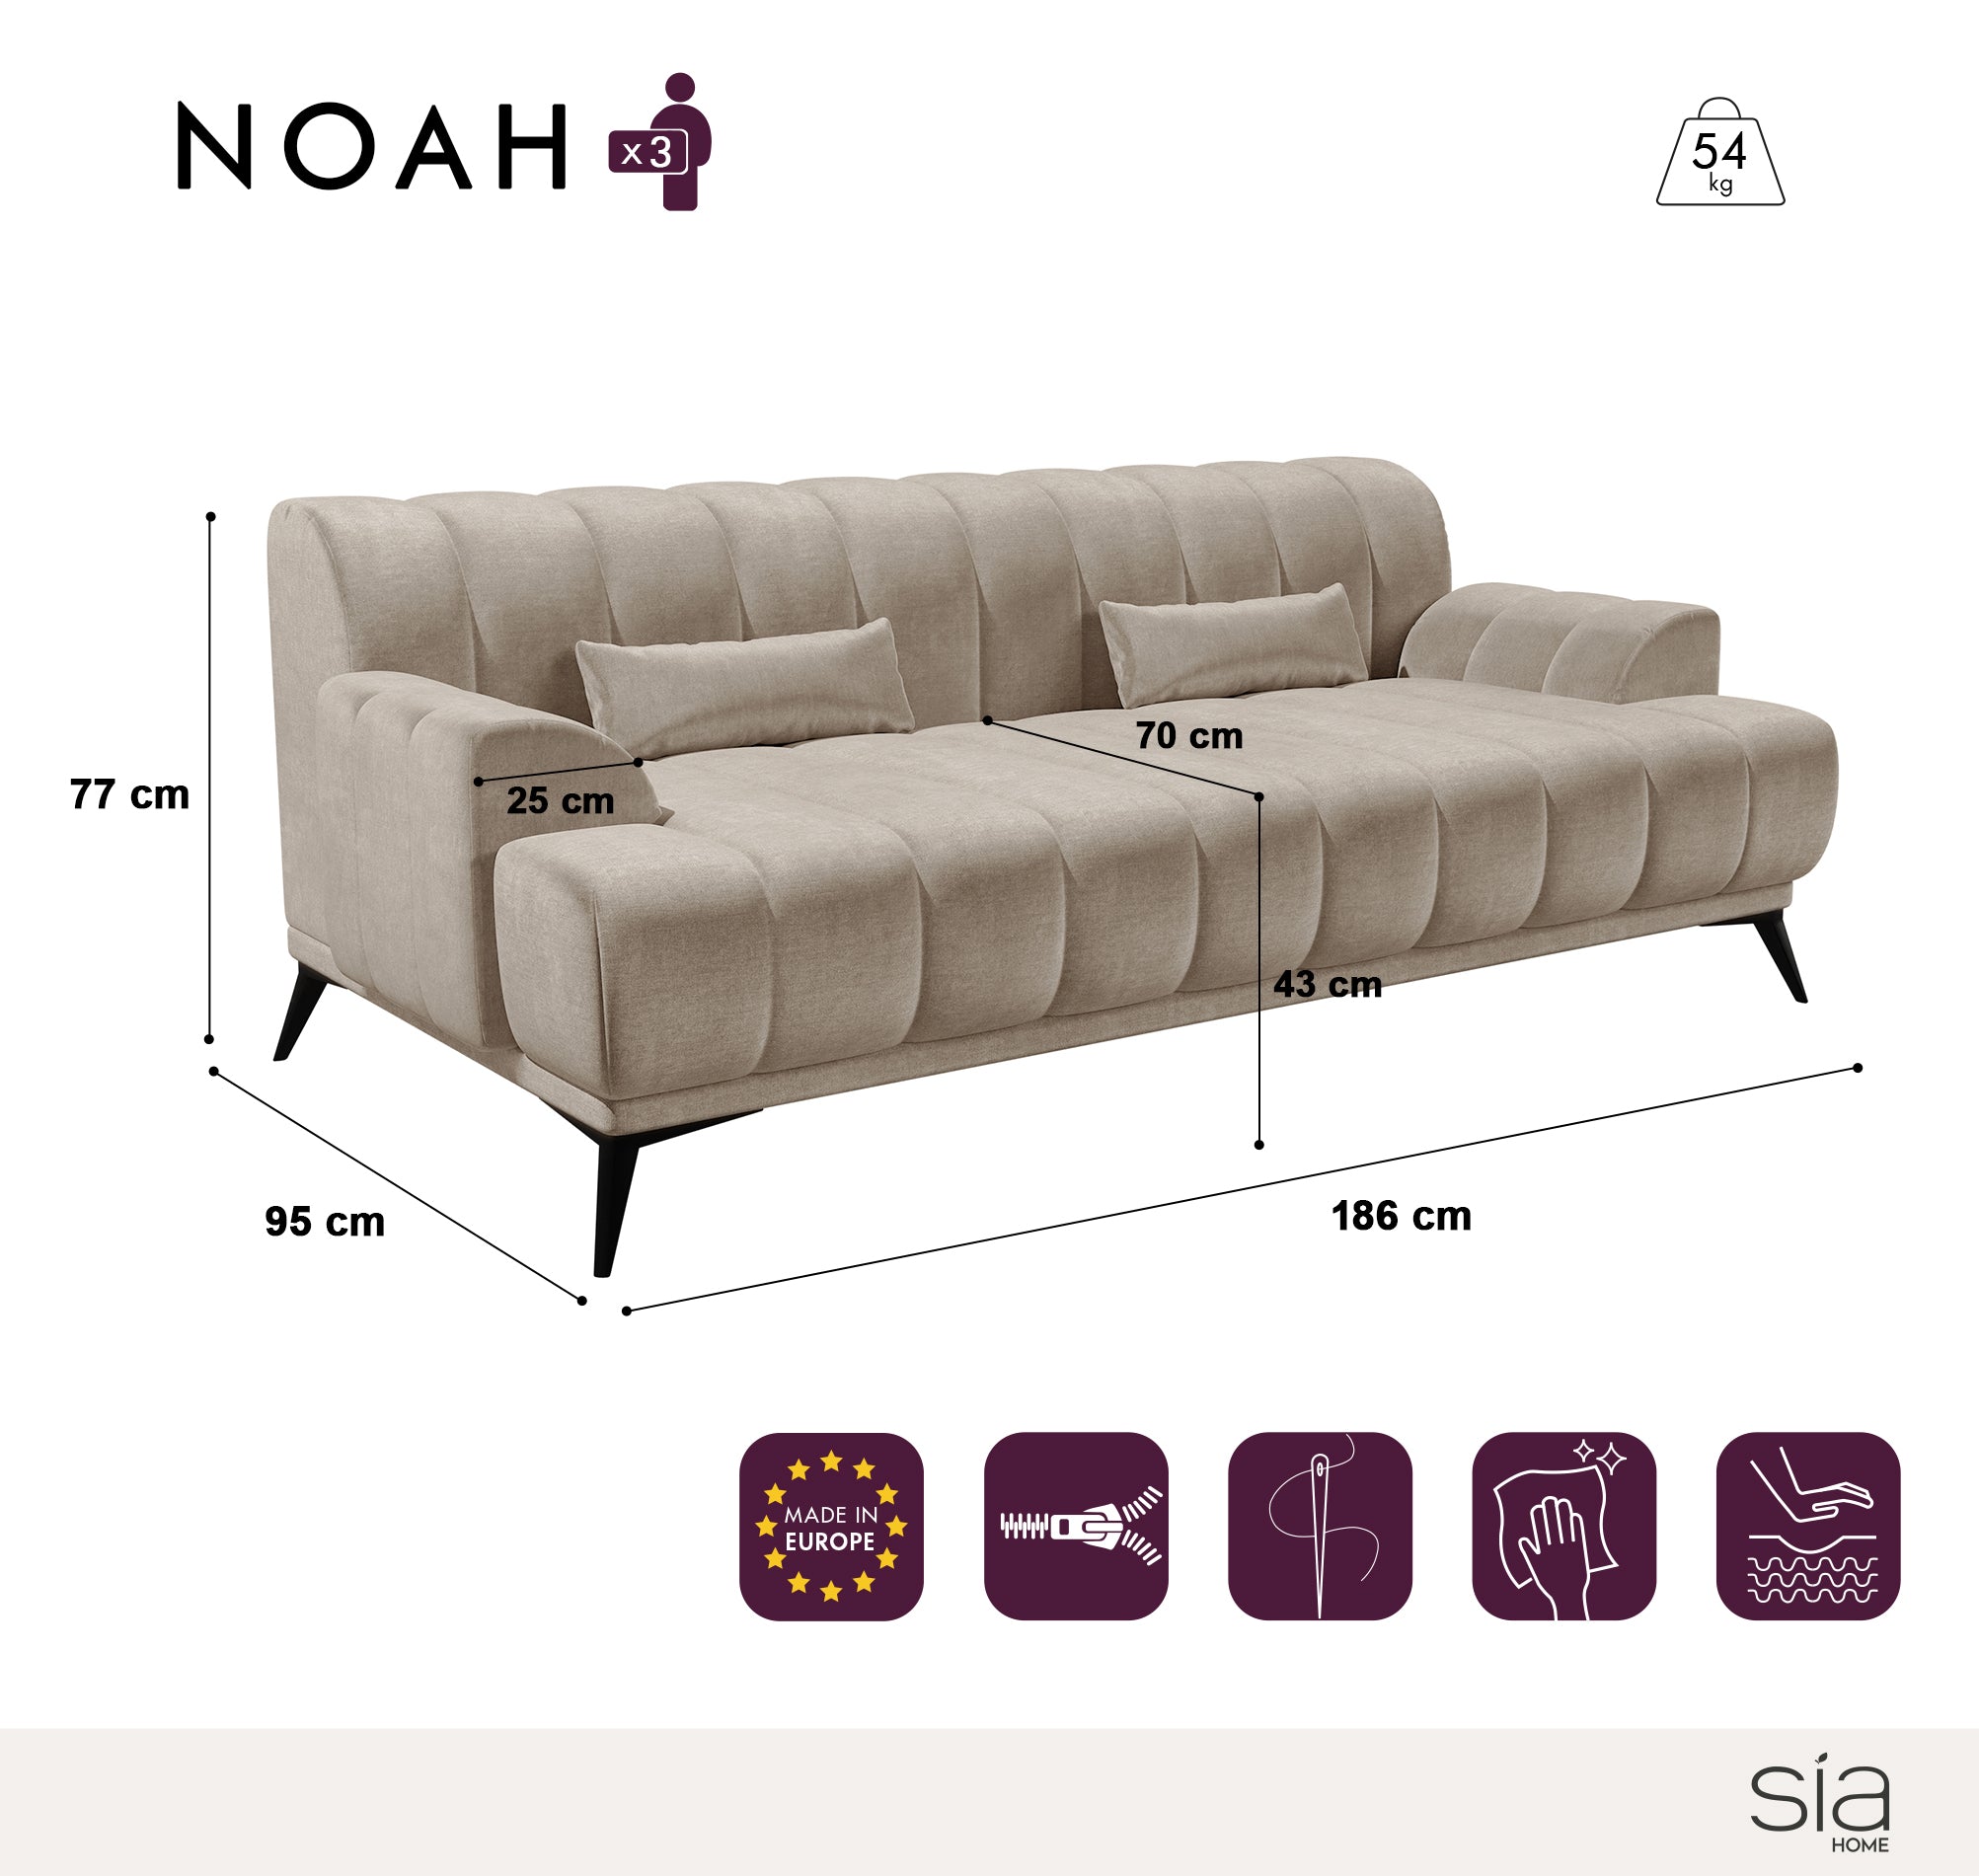 Canapé Noah